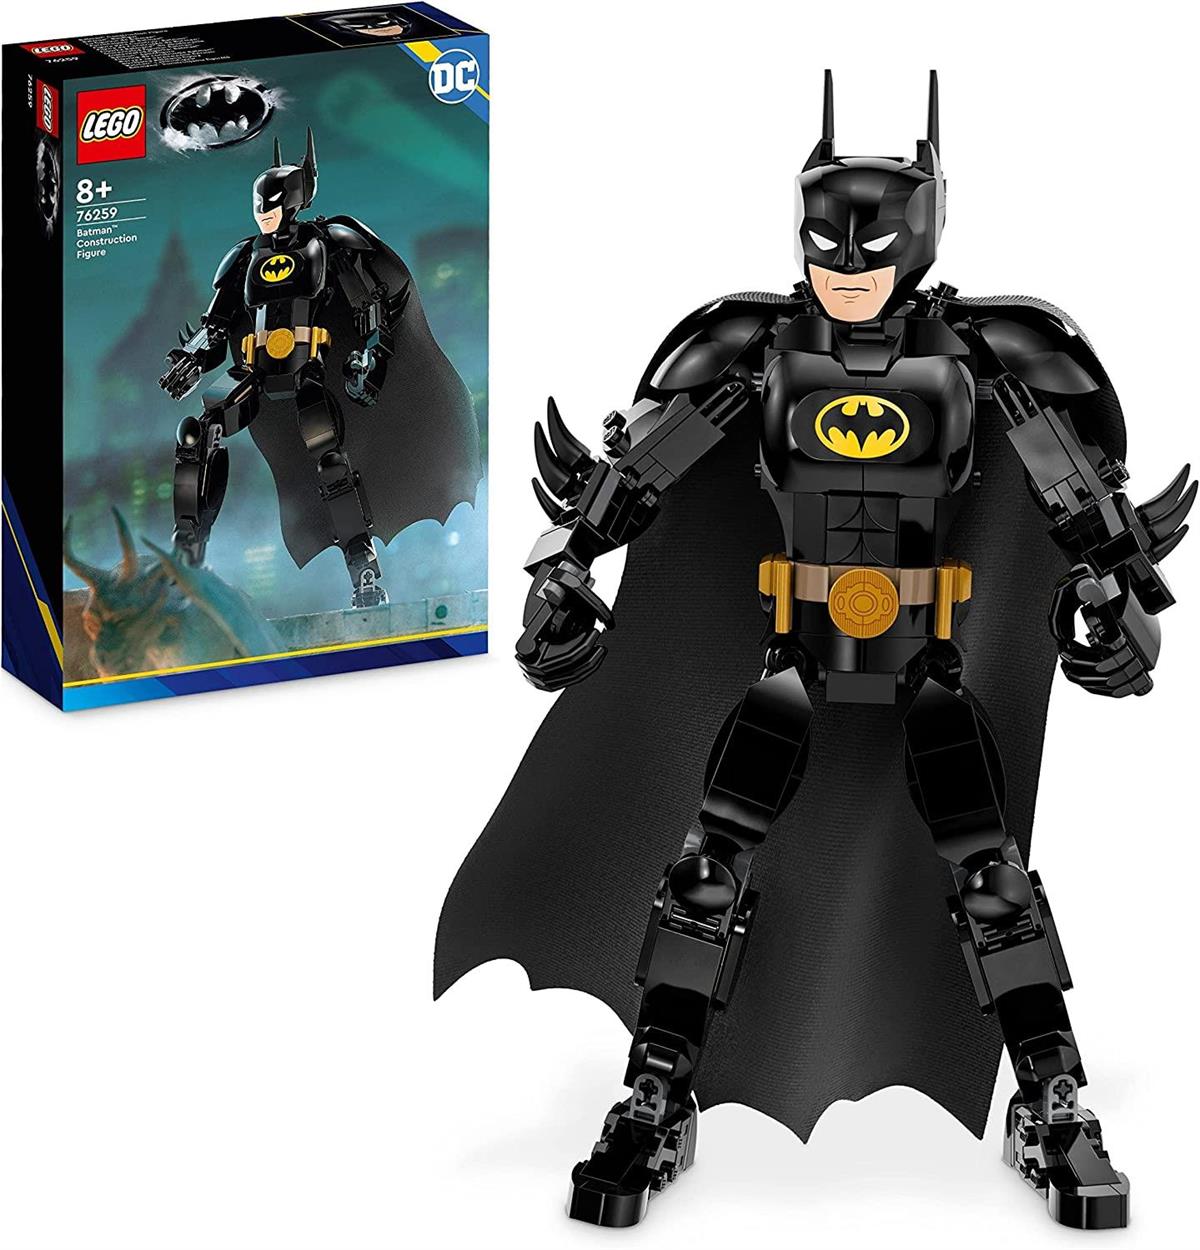 Lego DC Batman Yapım Figürü 76259 | Toysall